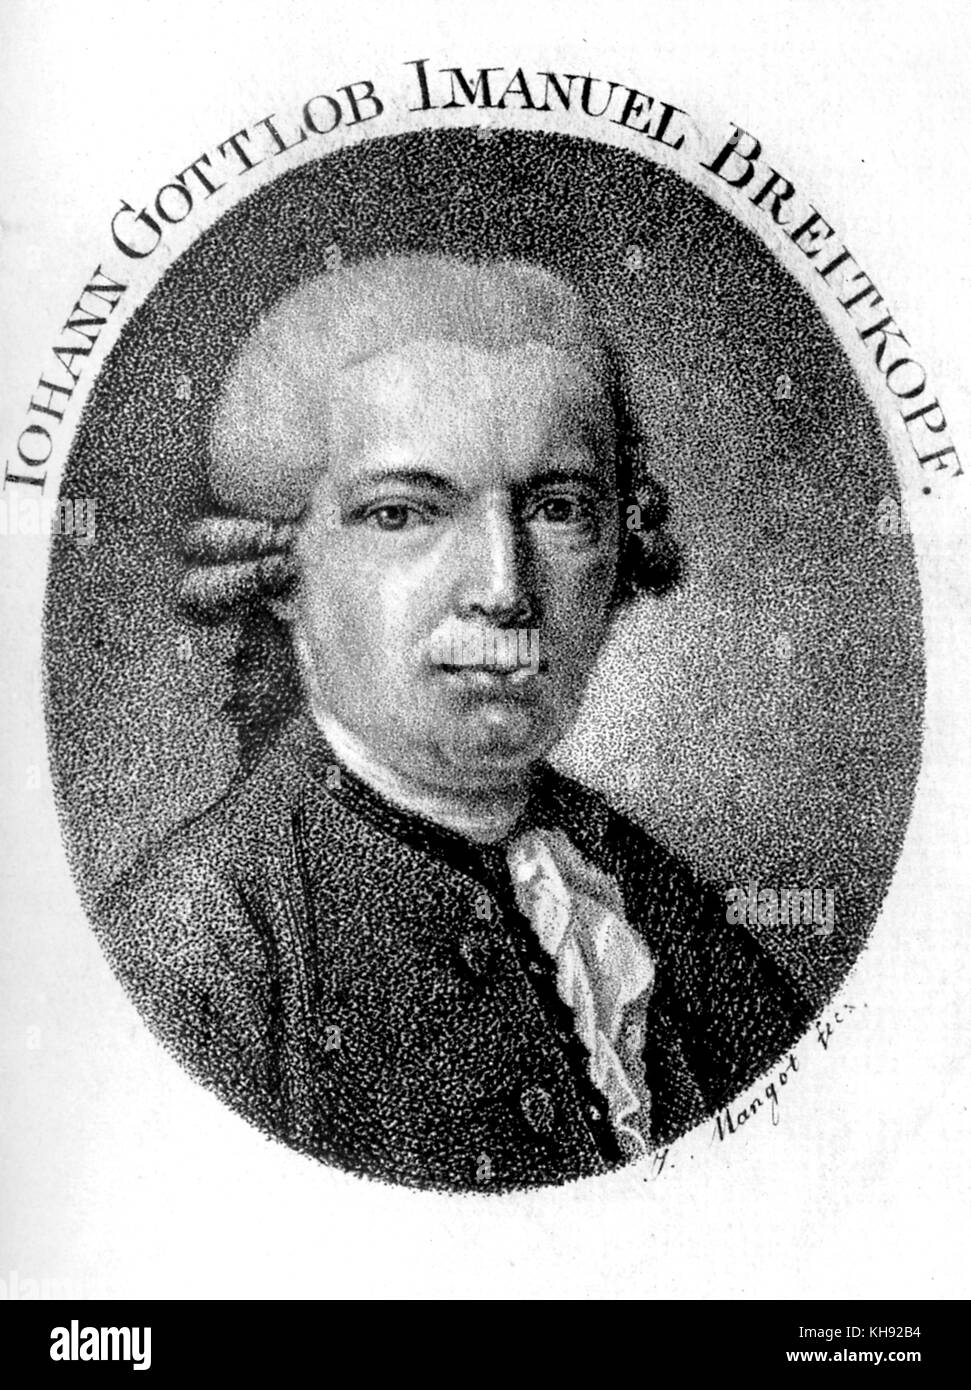 Johann Gottlob Immanuel Breitkopf - portrait of German music publisher and typographer. 23 November 1719 – 28 January 1794. Stock Photo